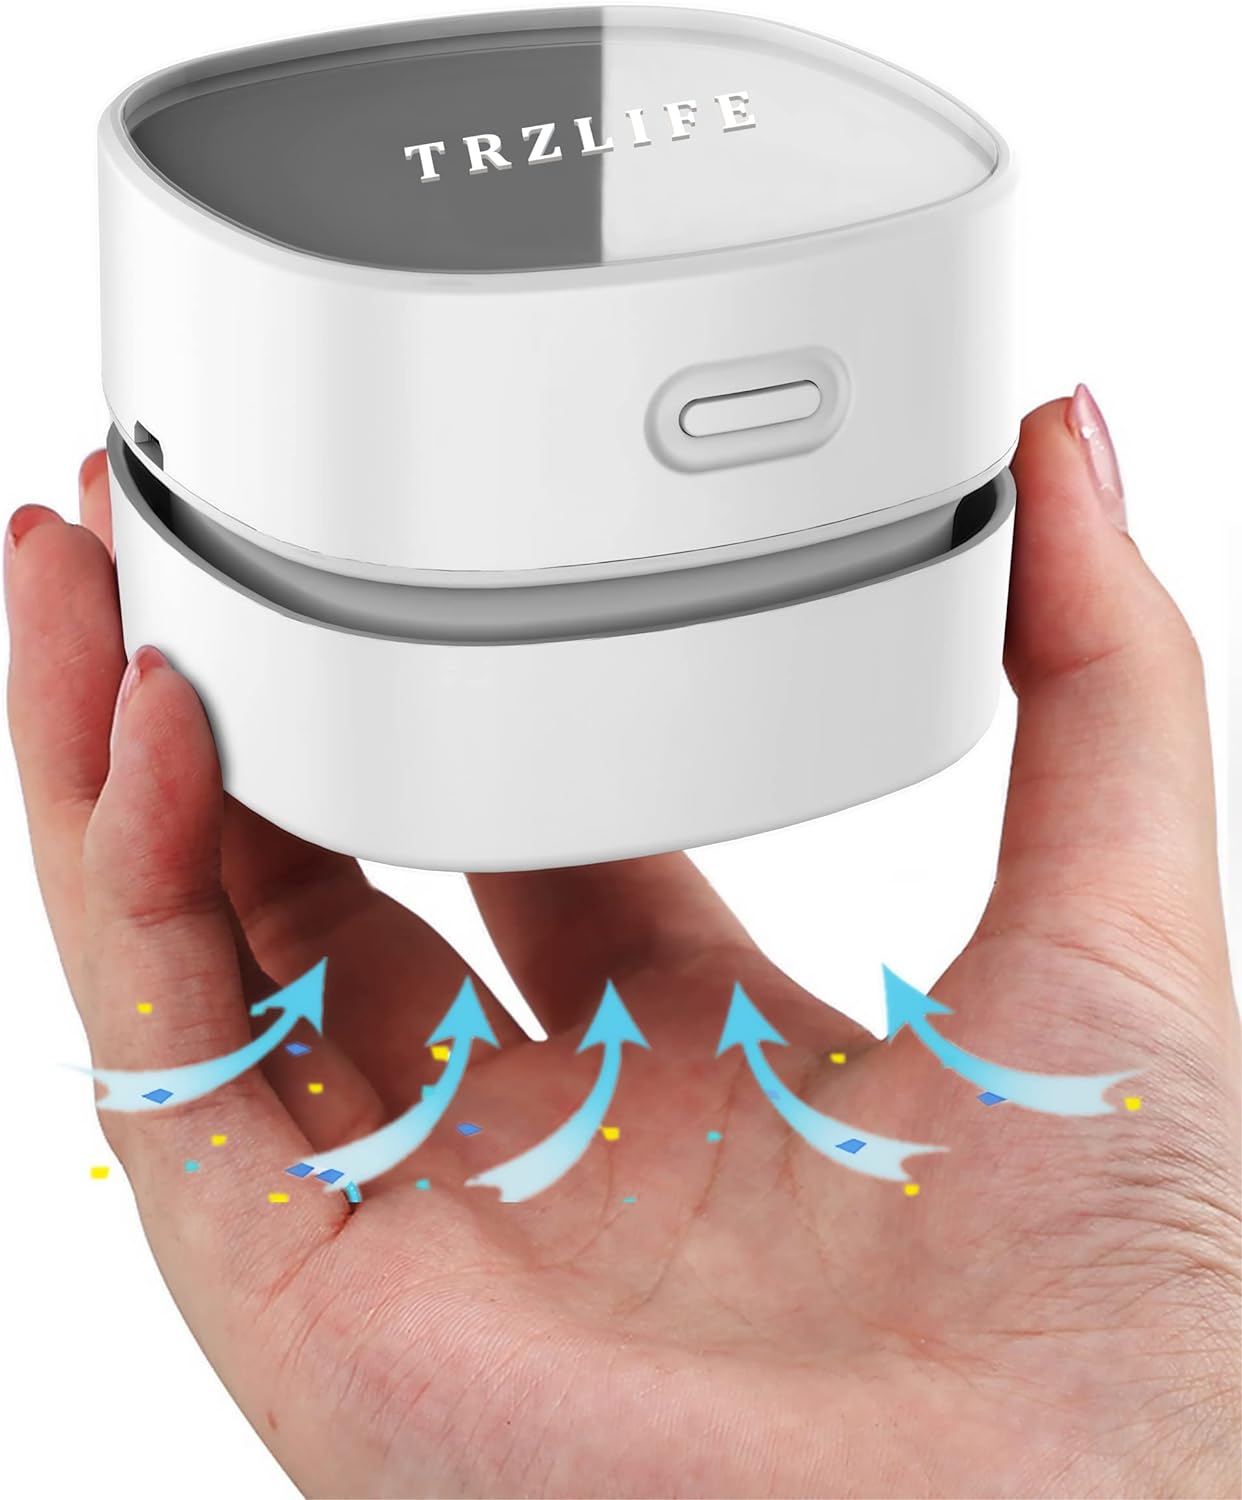 TRZLIFE Desk Vacuum Cleaner Review